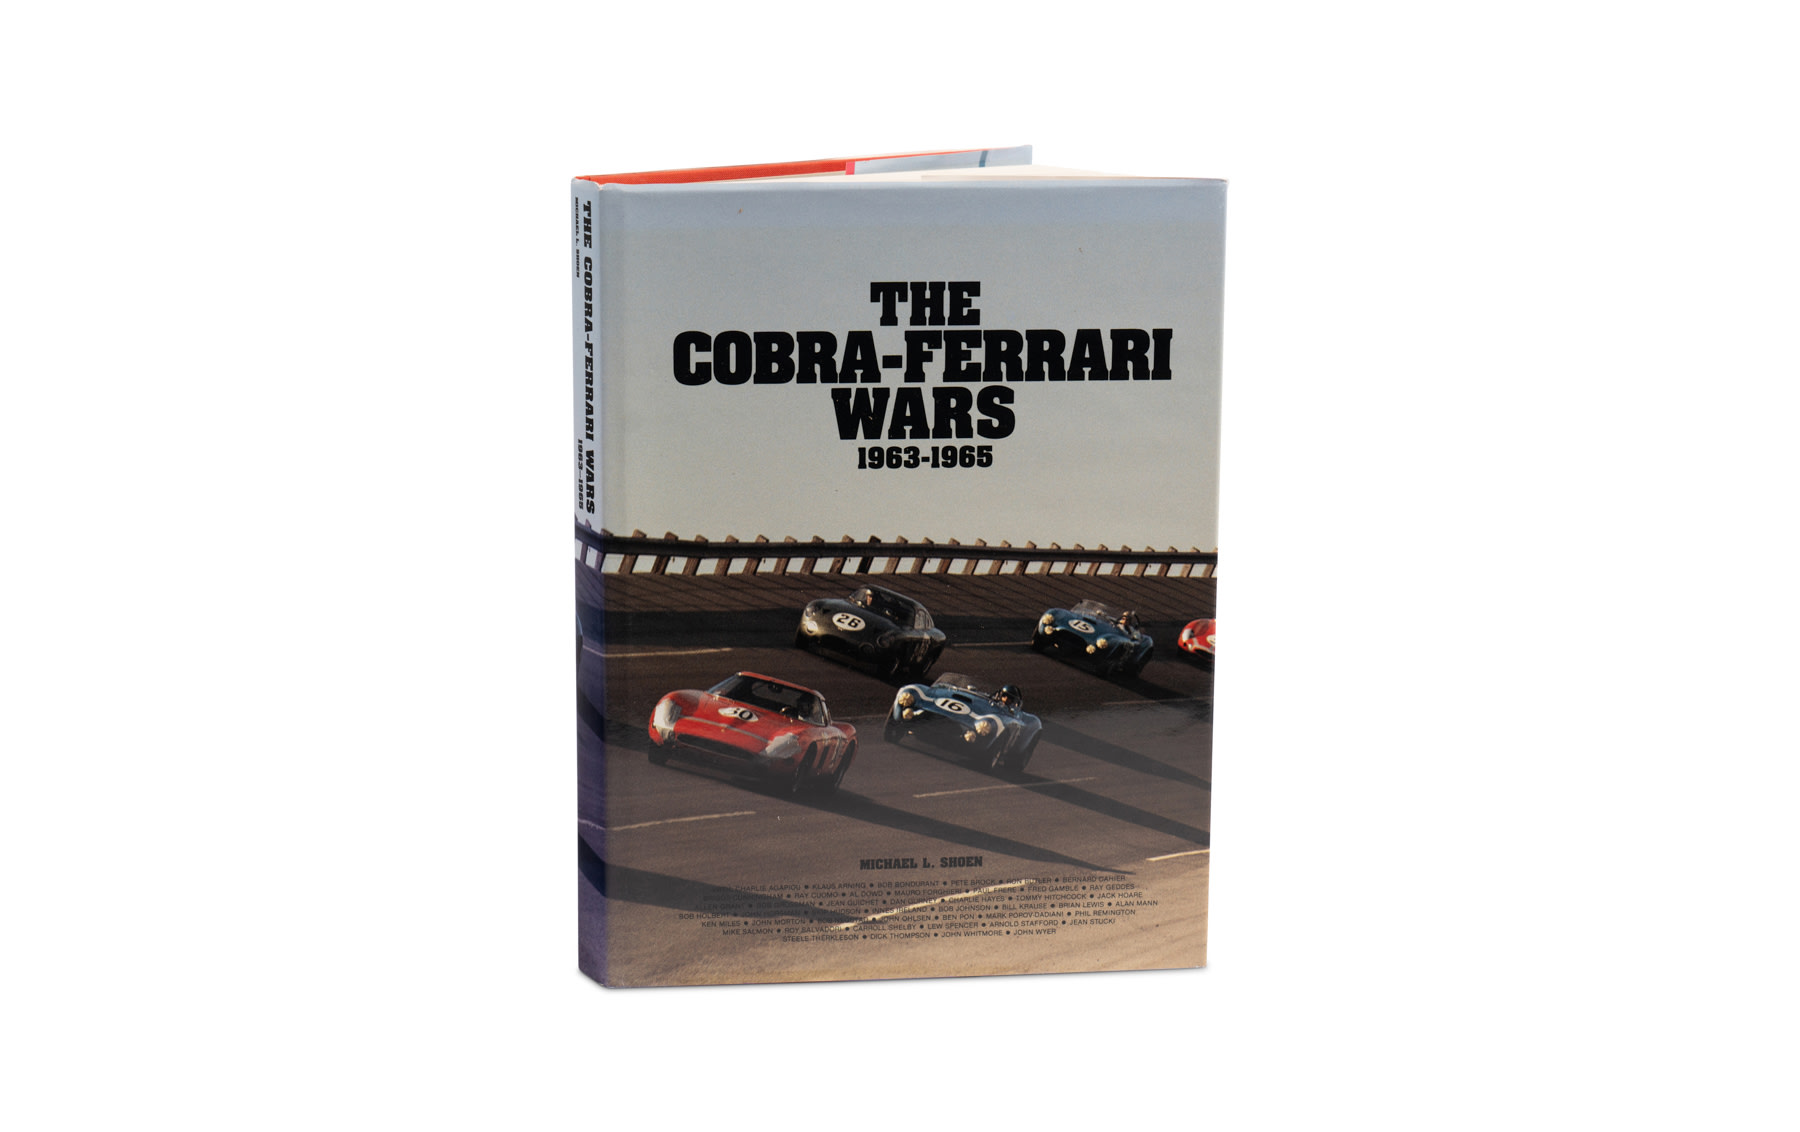 The Cobra-Ferrari Wars 1963-1965 by Michael L. Shoen